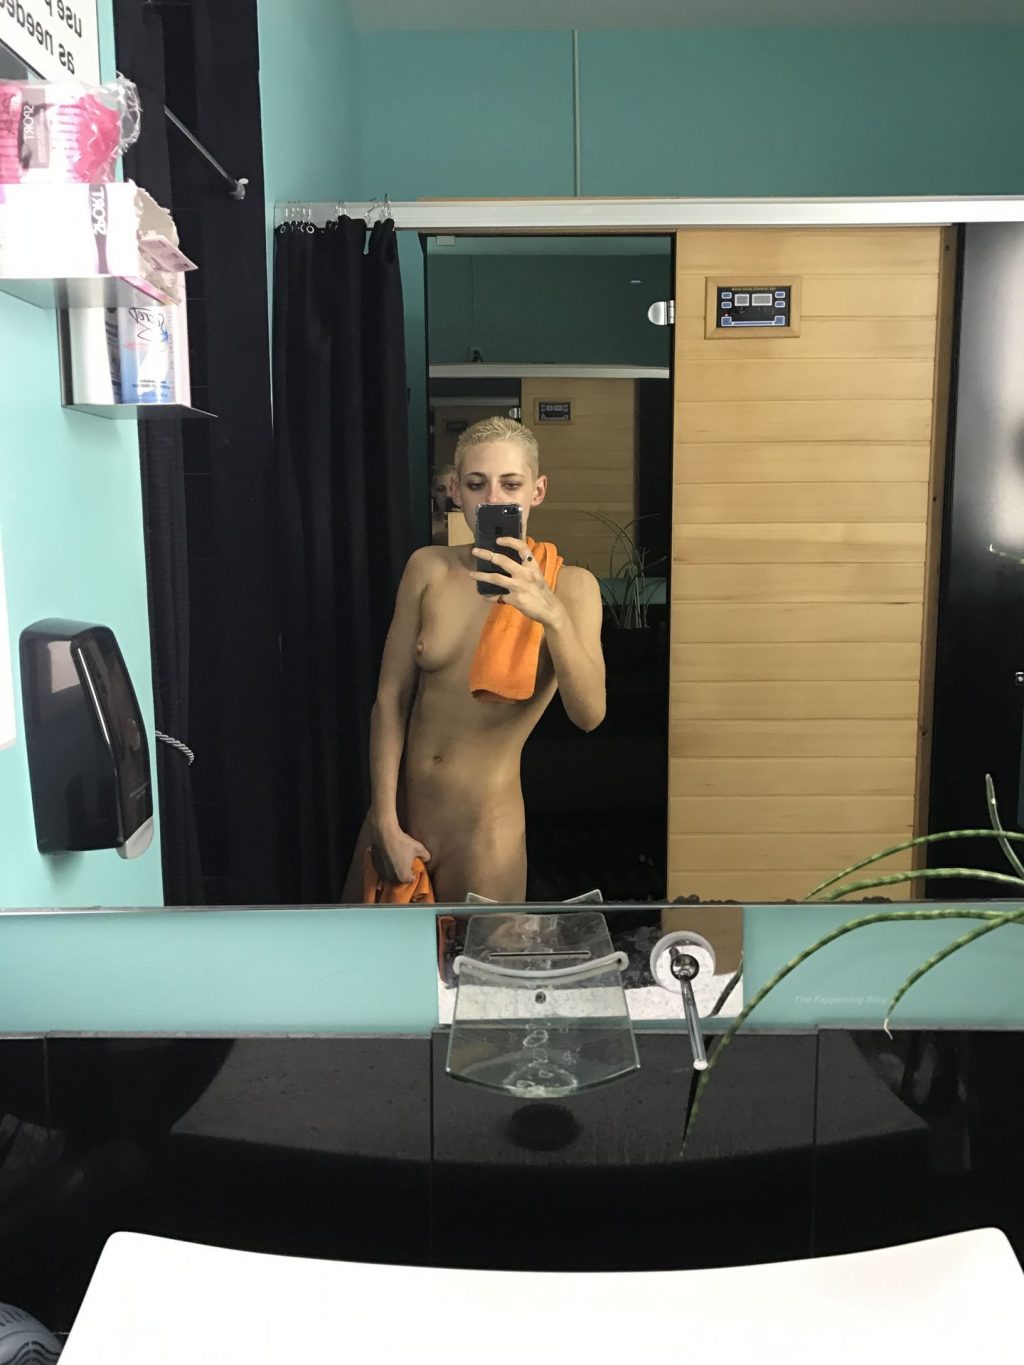 Kristen stewart leaked nude photos